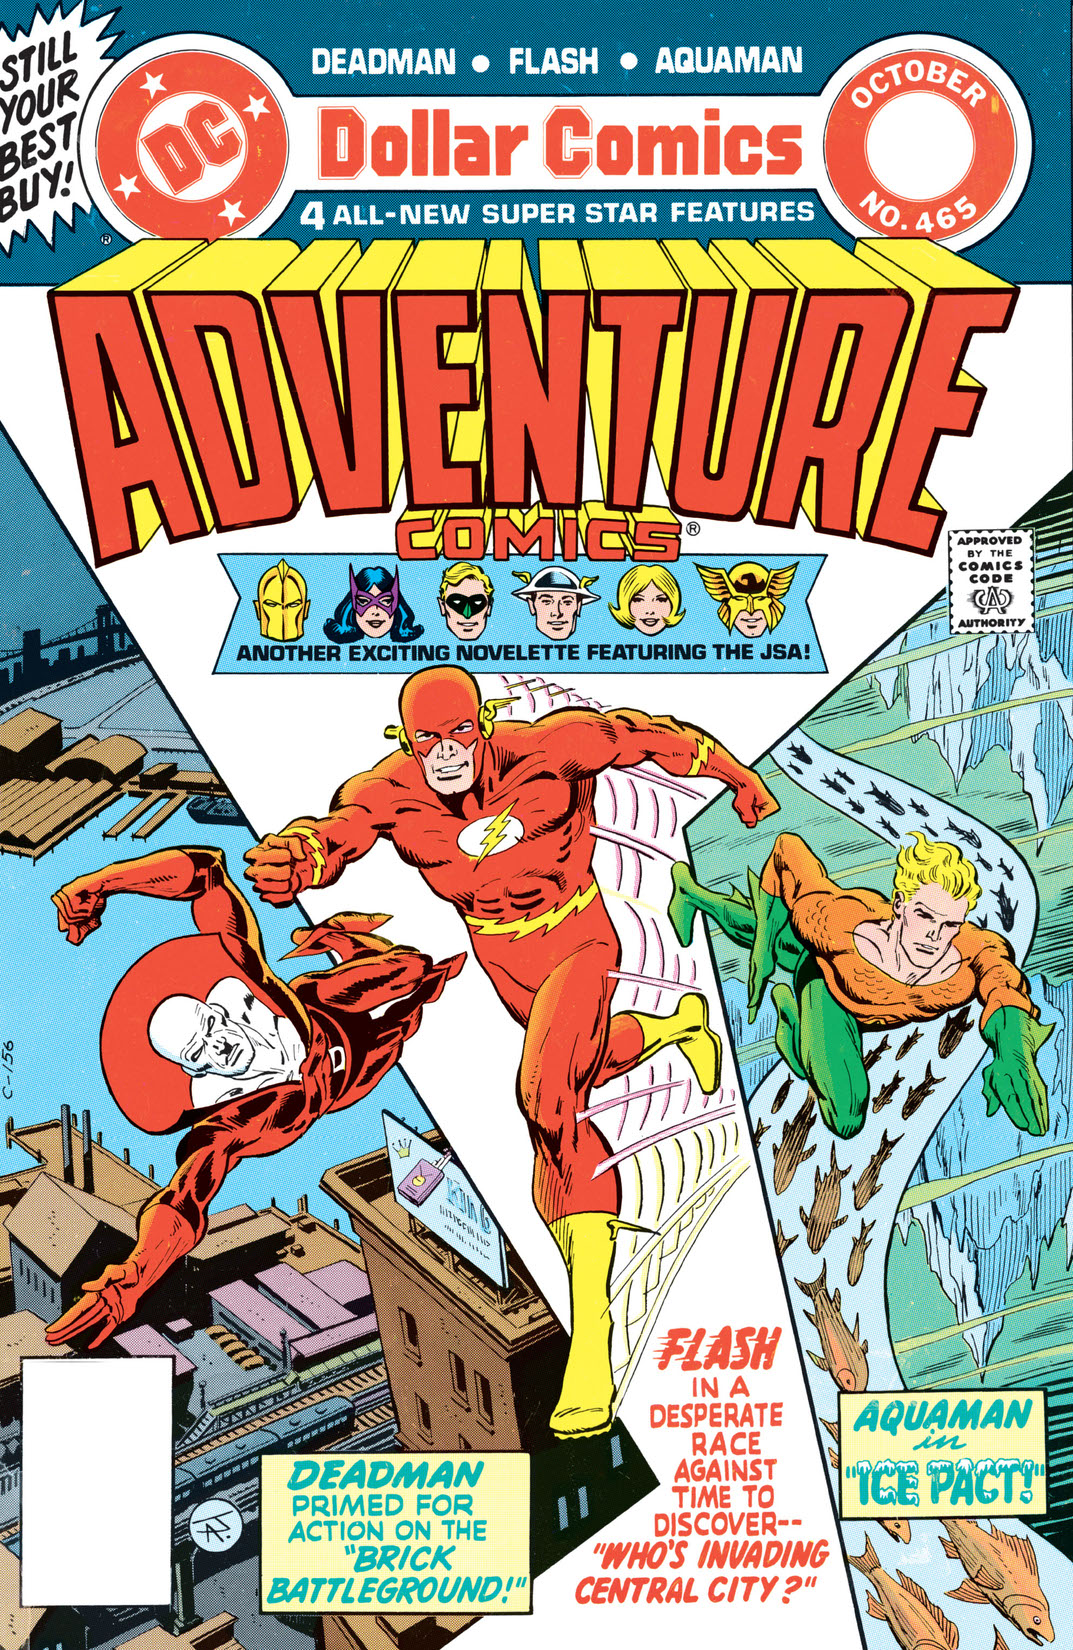 Adventure Comics (1938-) #465 preview images